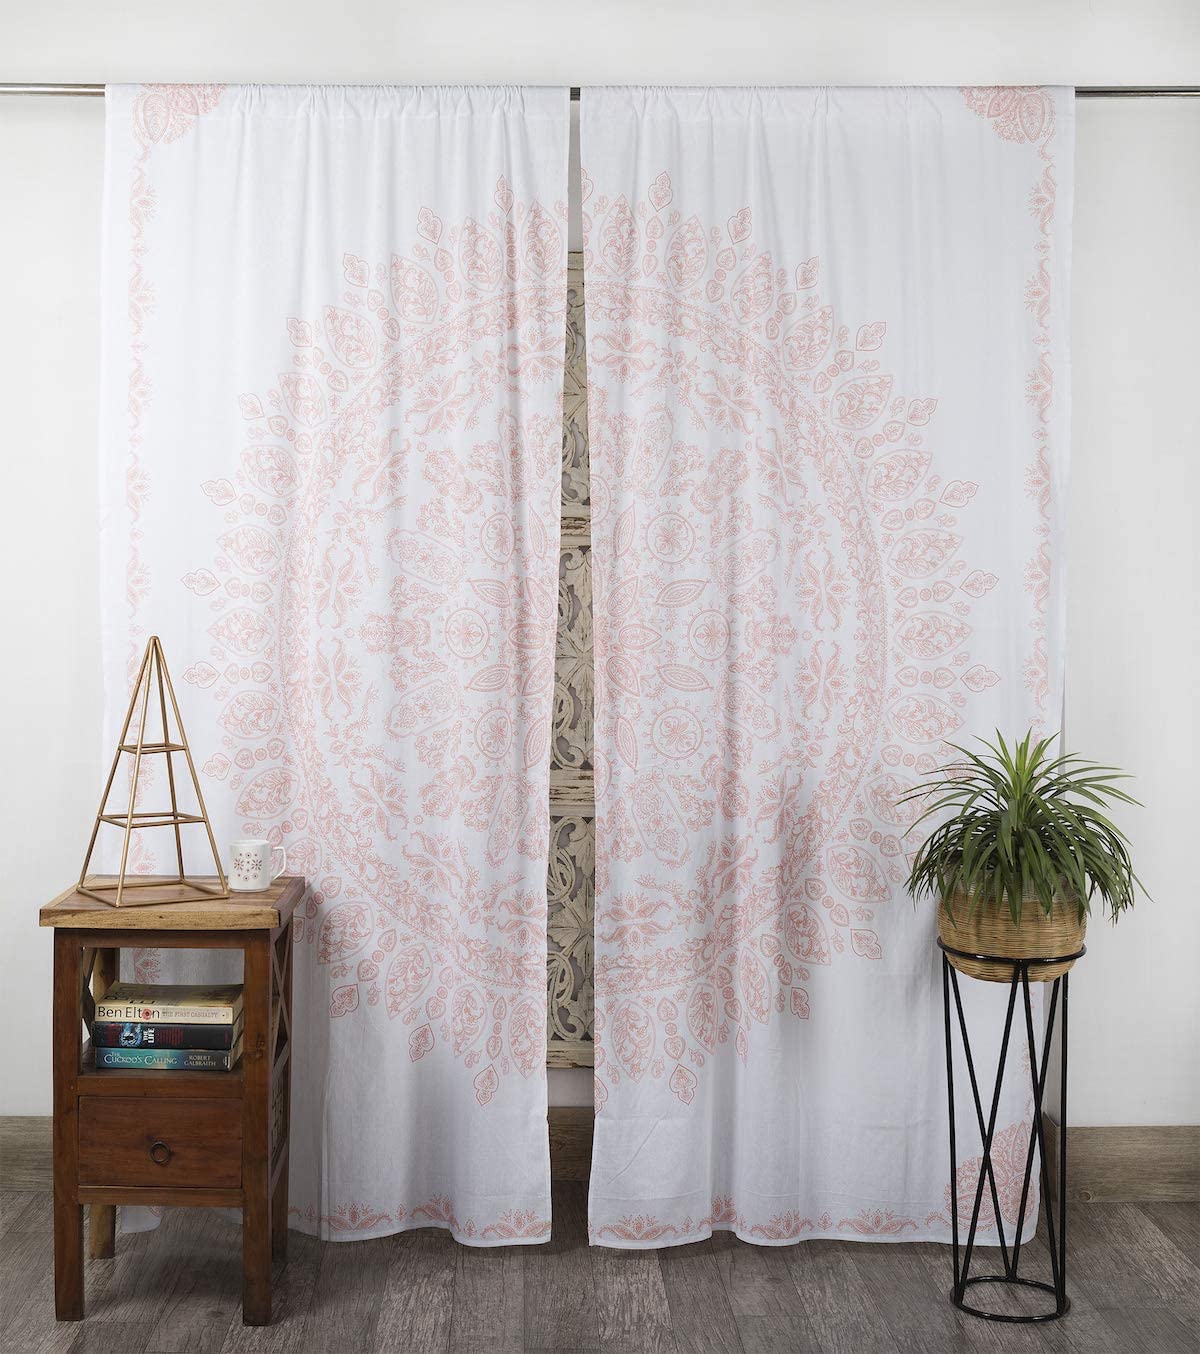 Indian White Gold Mandala Wall Hanging Window Curtain Door Drape Panel Valances 